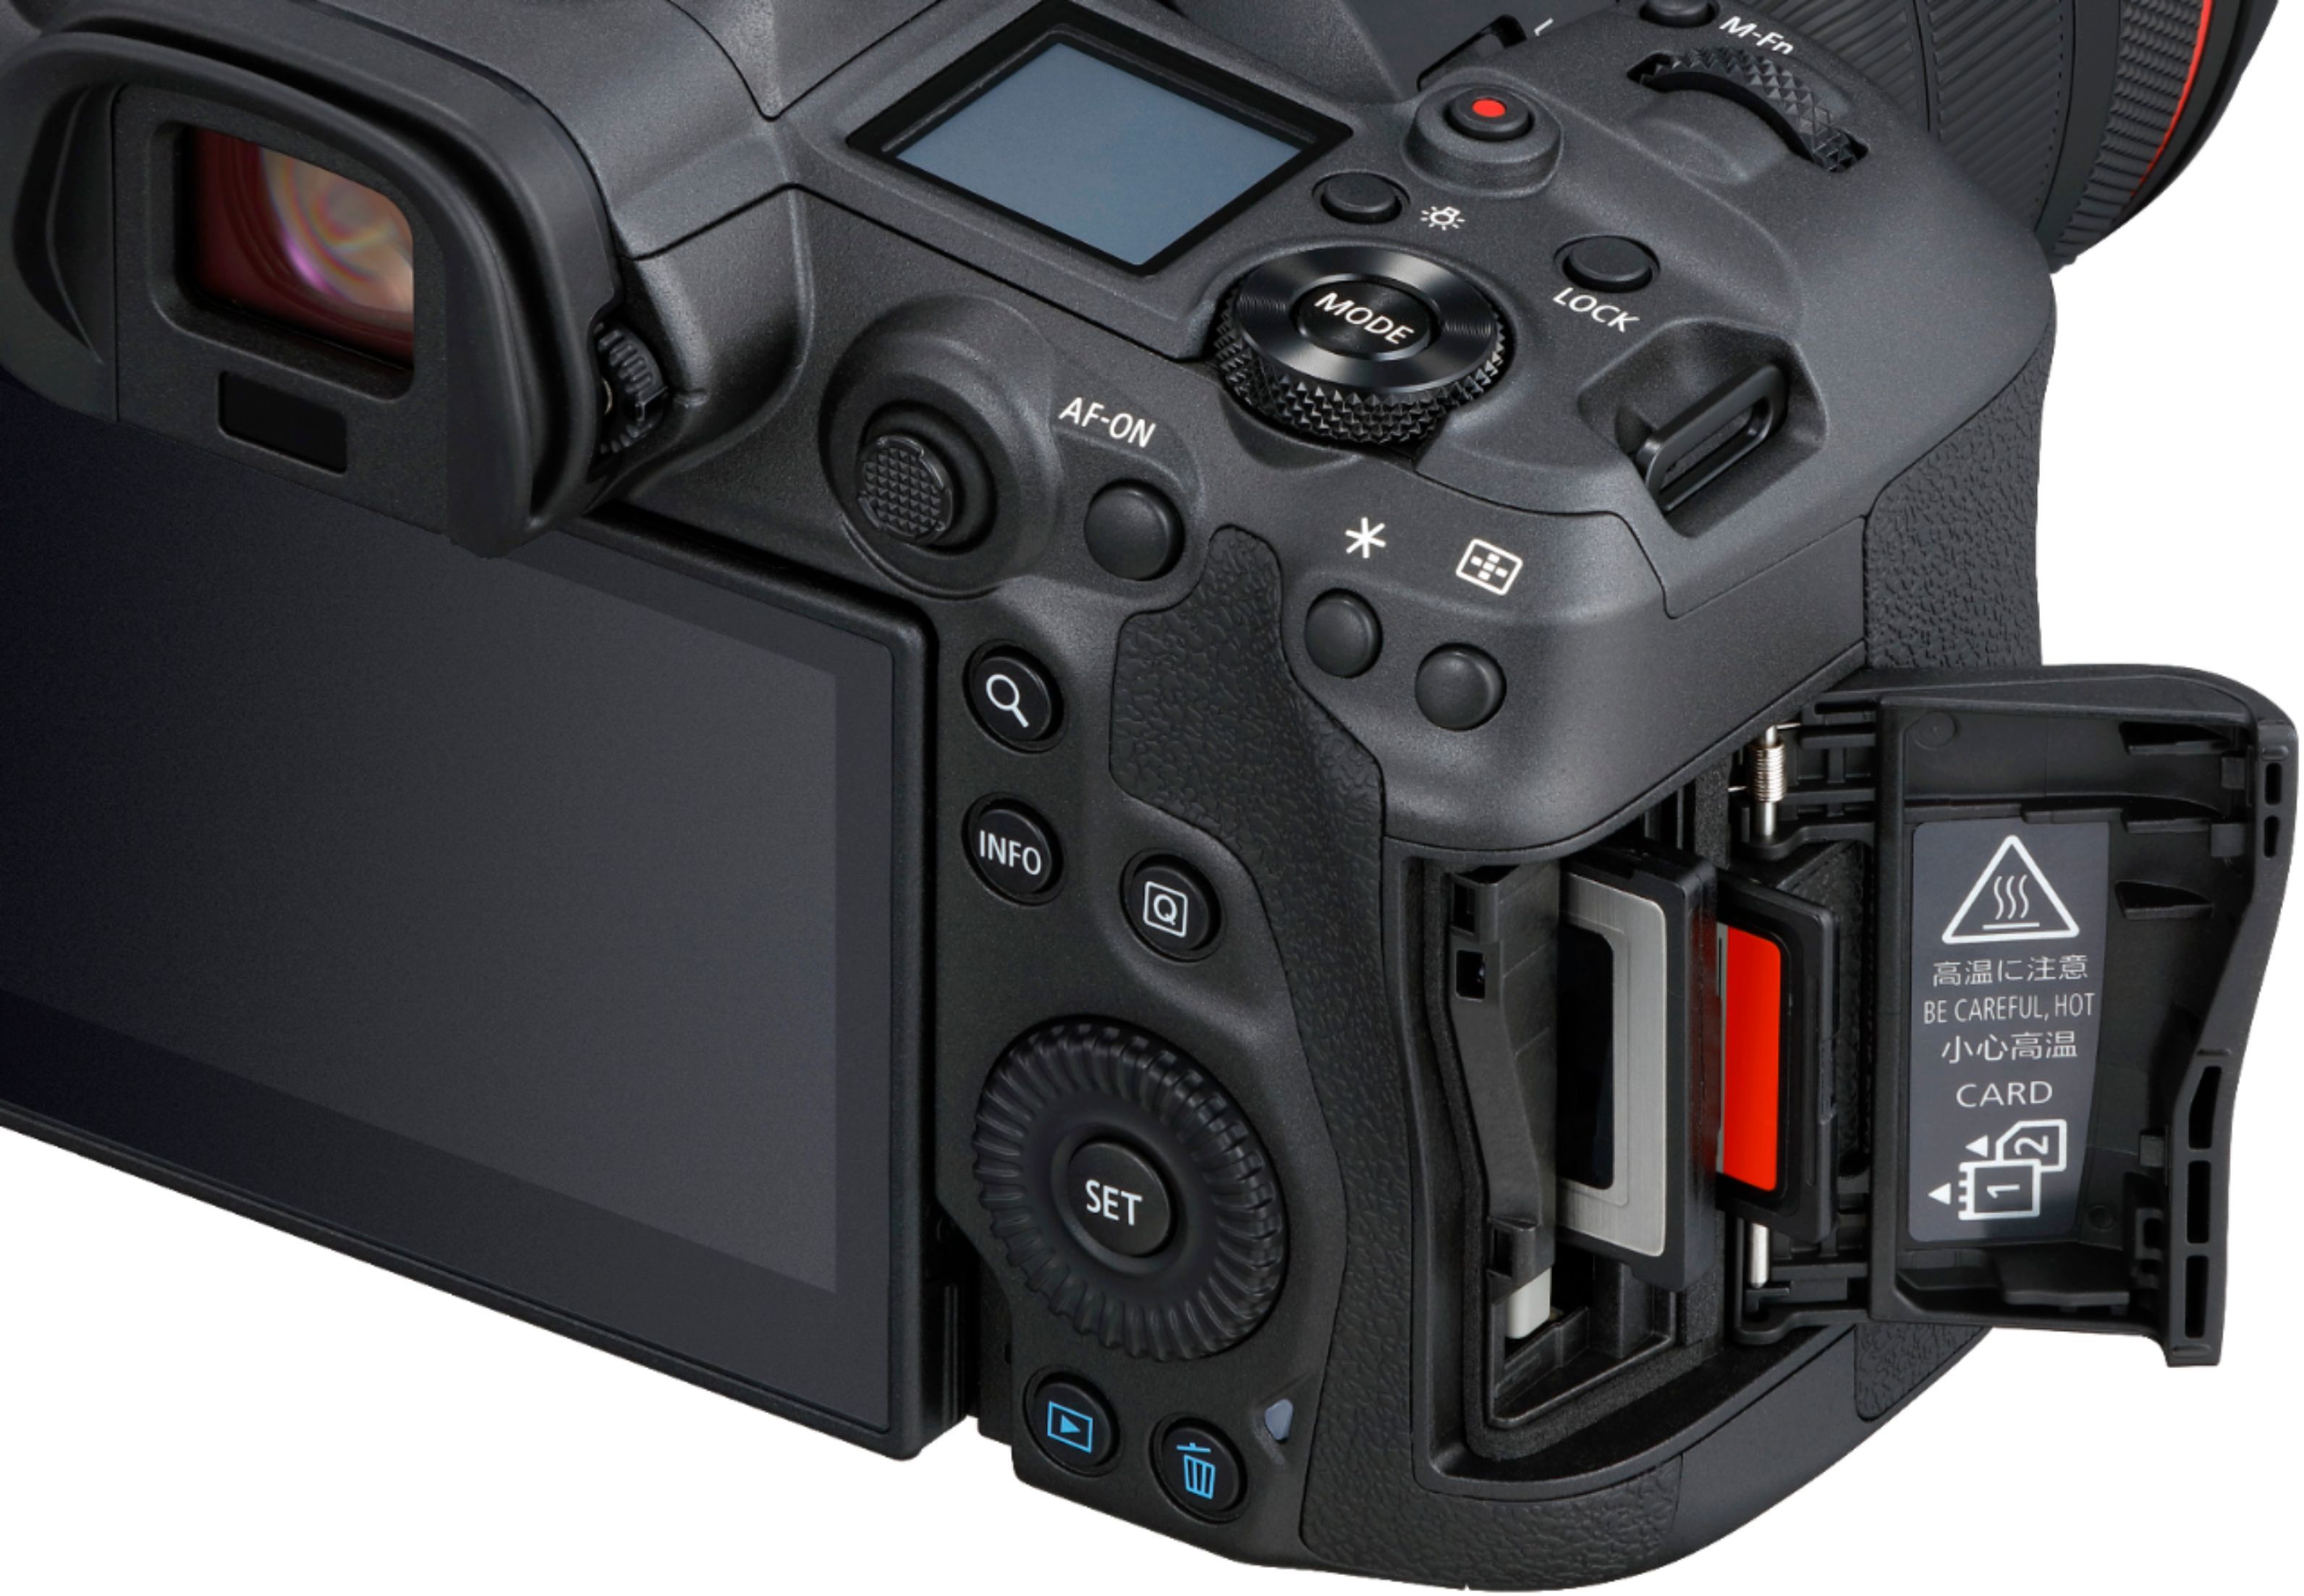 Angle View: Panasonic - LUMIX G100 Mirrorless Camera for Photo, 4K Video and Vlogging, 12-32mm Lens - DC-G100KK - Black